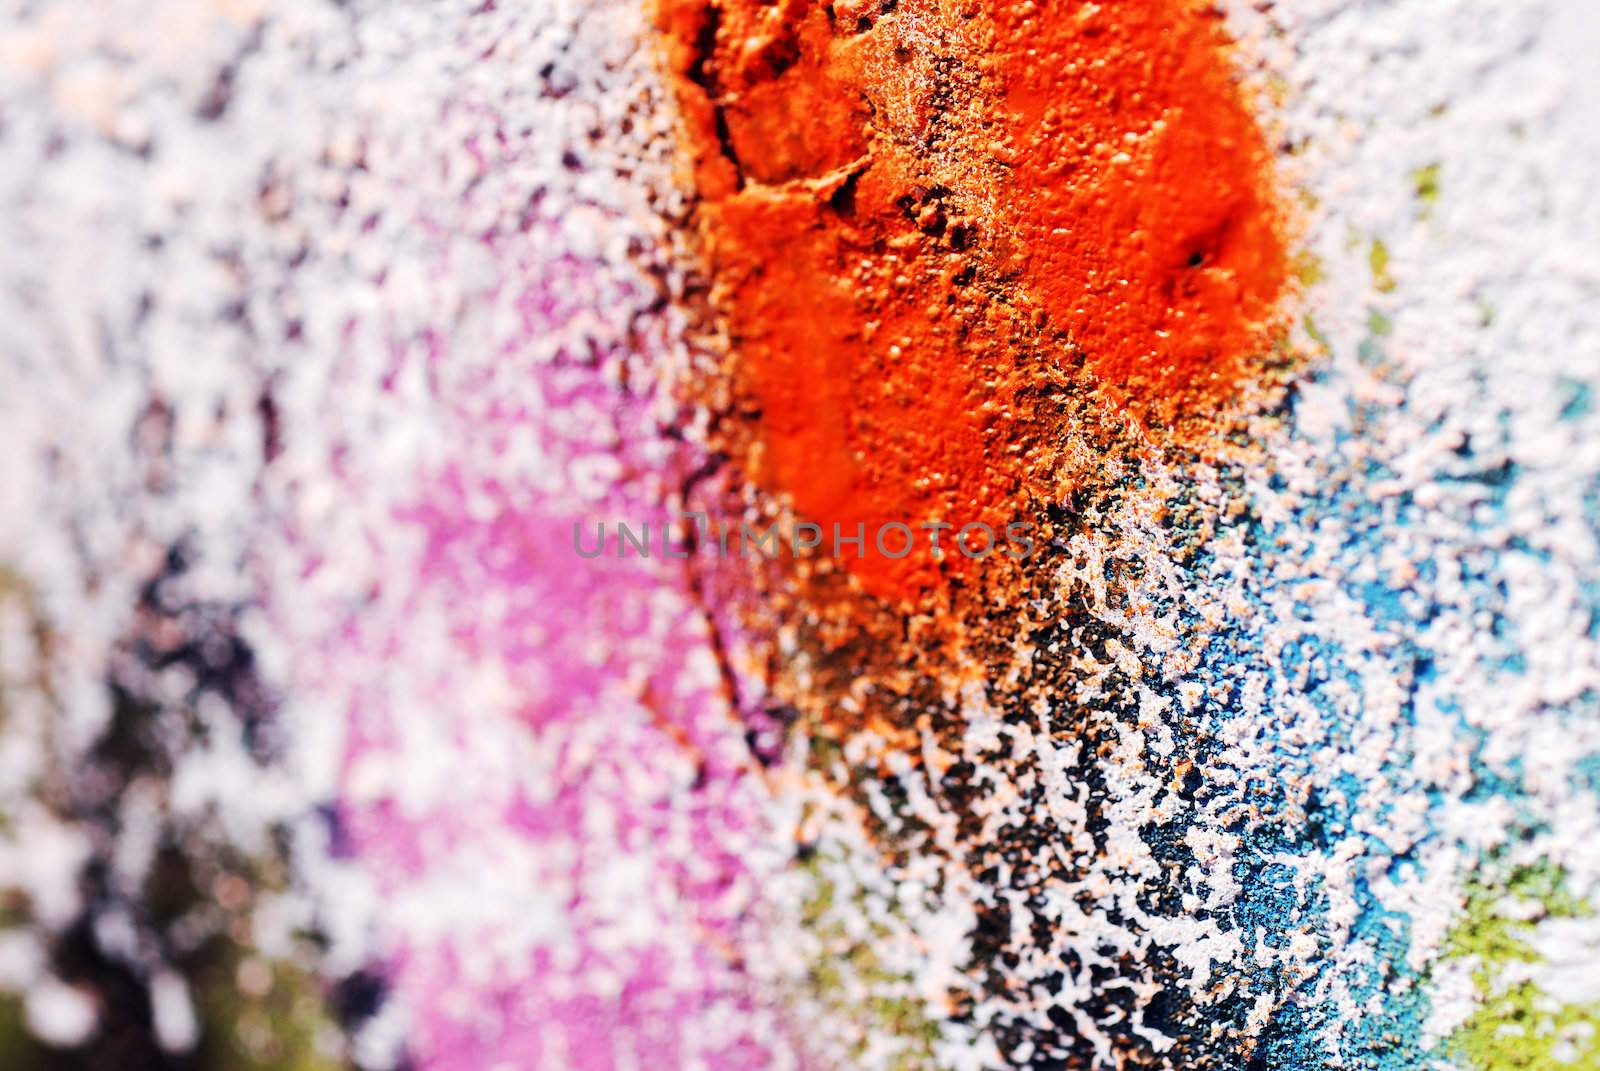 A macro photograph of close up spray painted graffiti